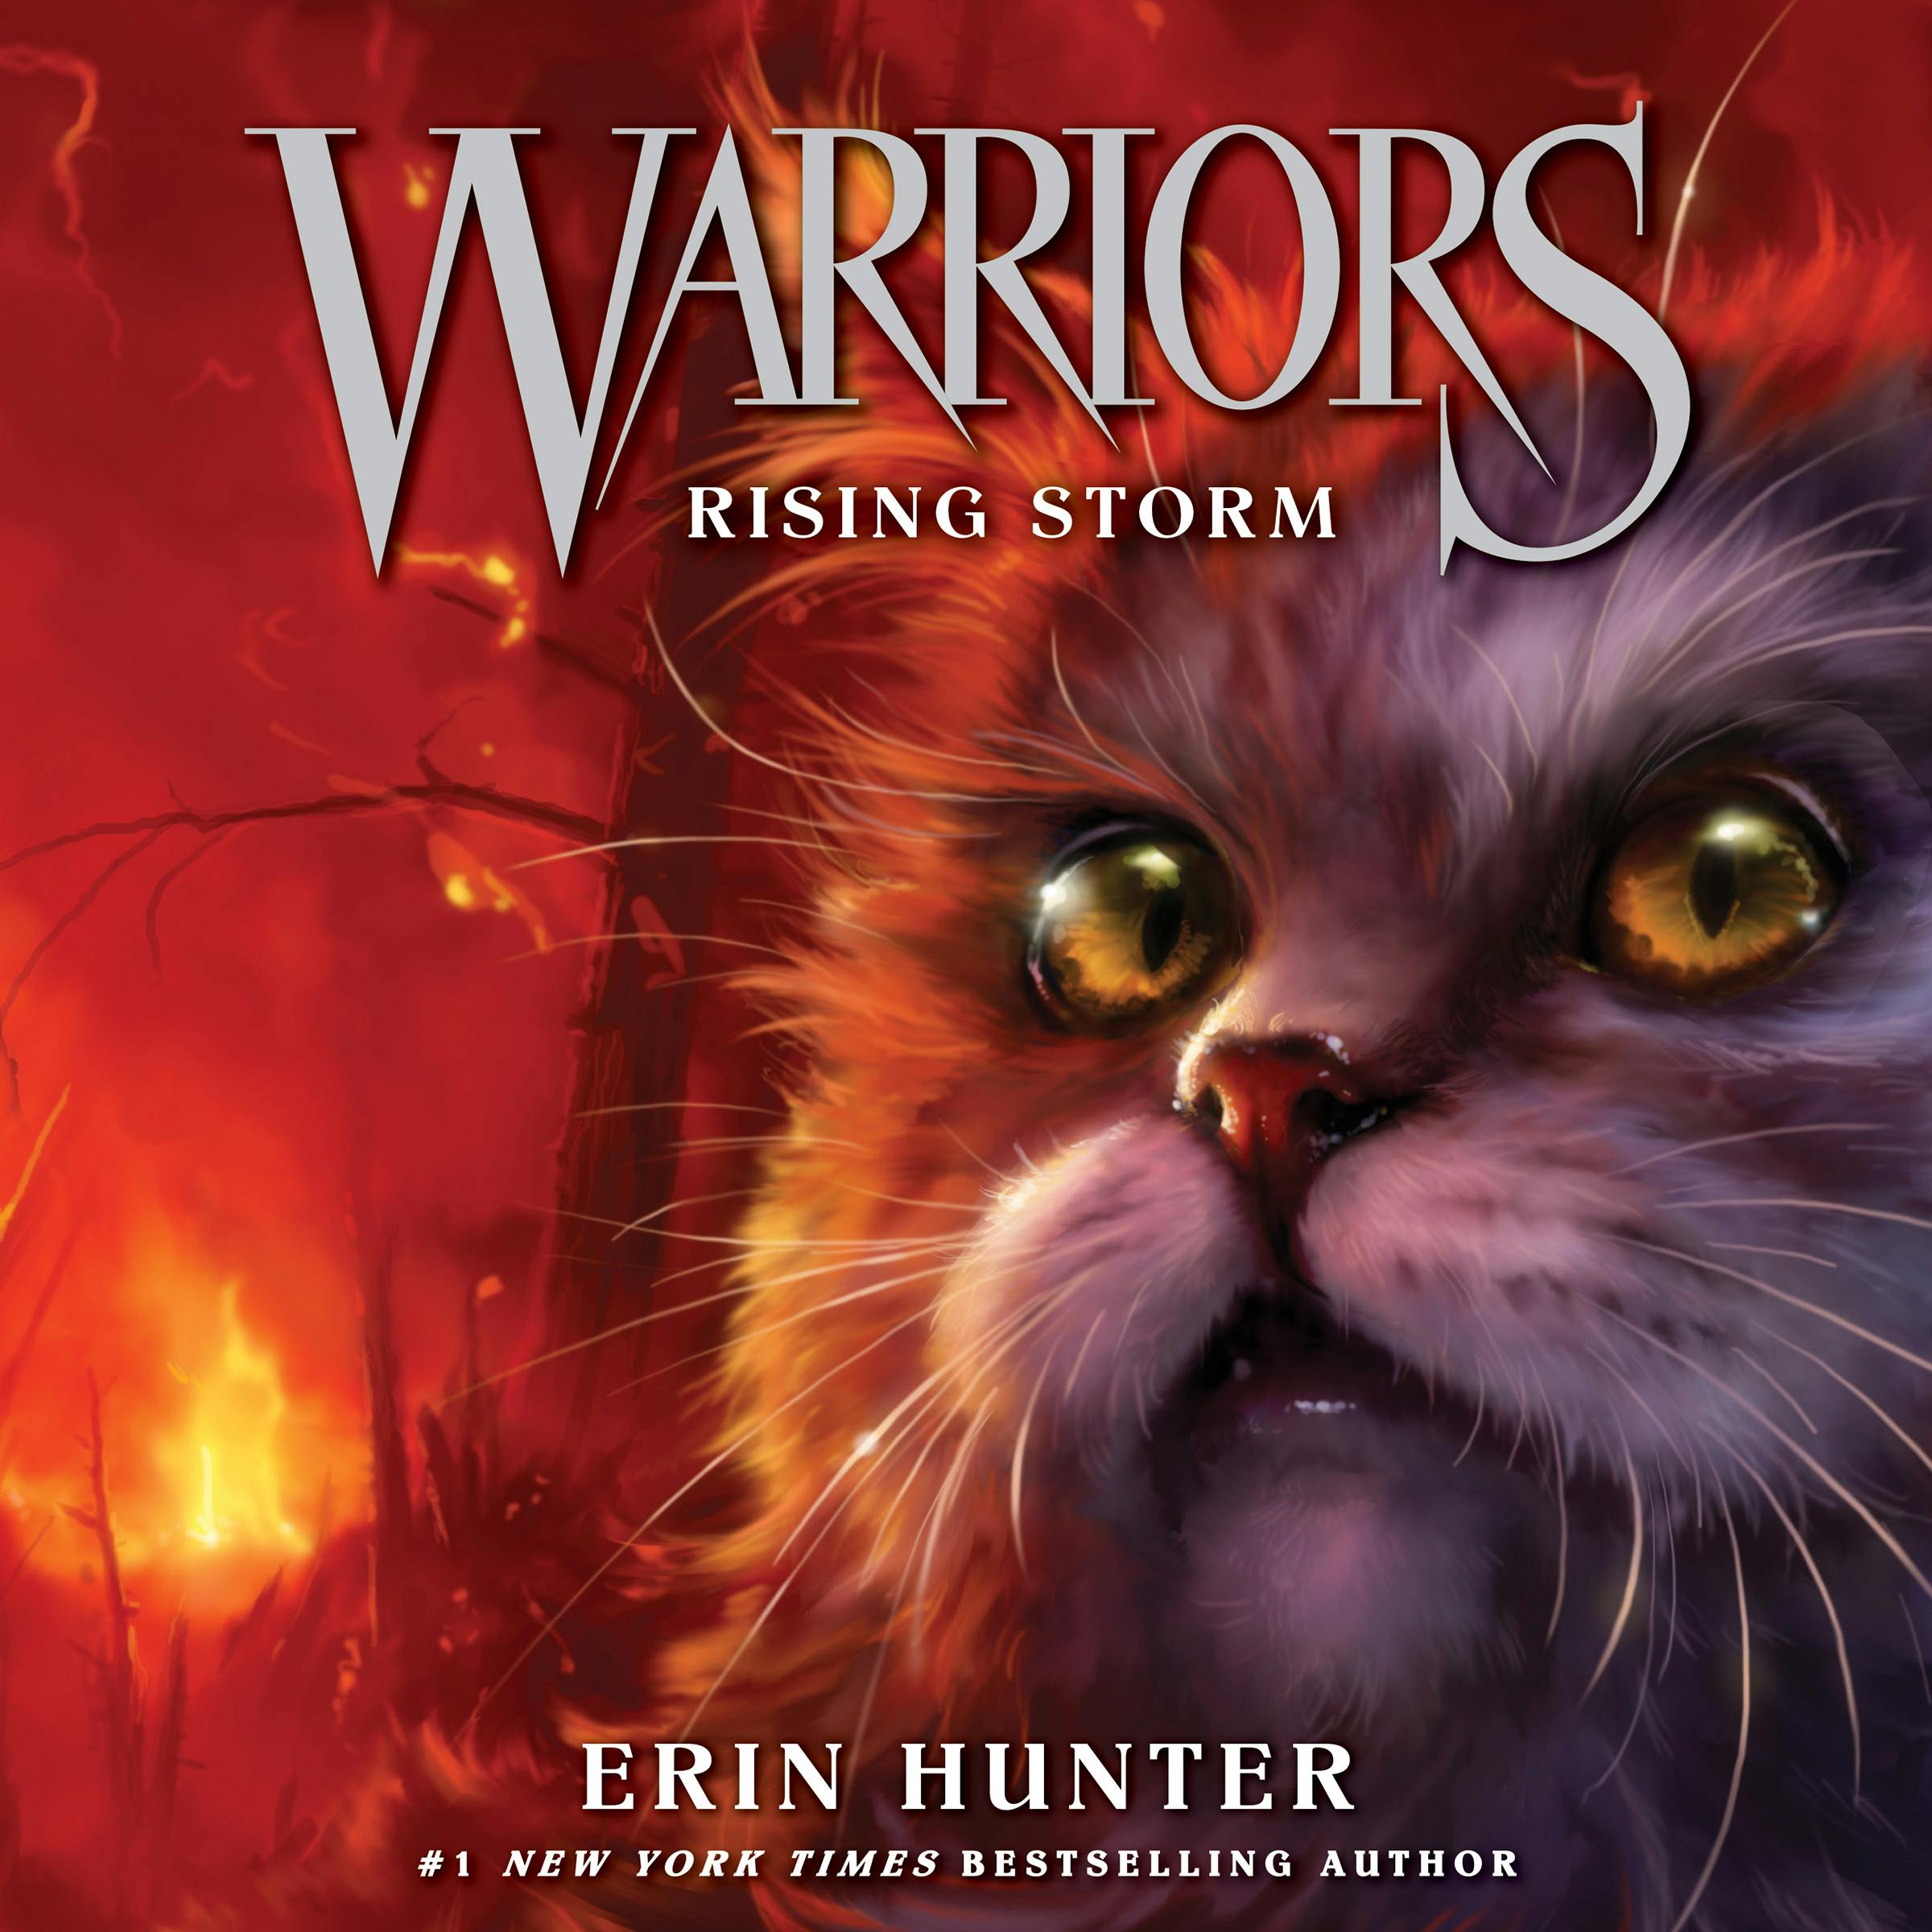 Warriors #4: Rising Storm - Erin Hunter